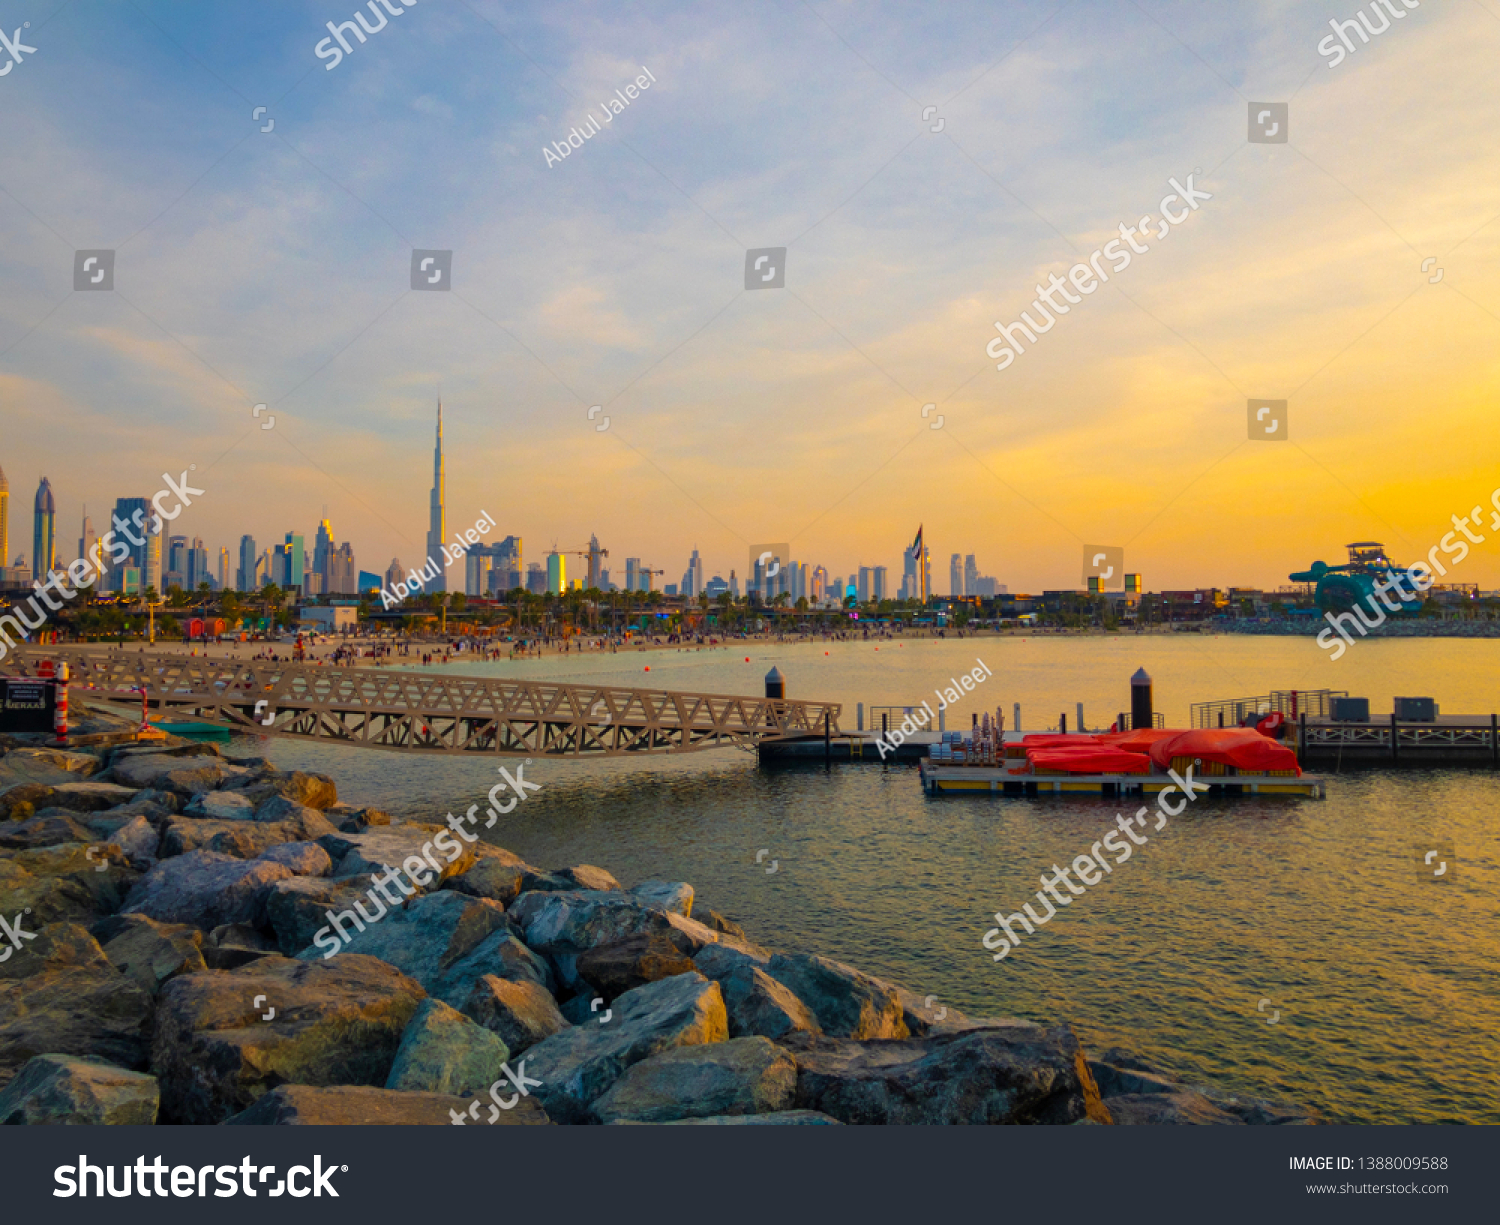 La Mer in Dubai, UAE - April 16, 2019: La Mer at sunset: People rest on the beach. It is a beachfront in Jumeirah. DUBAI, UAE. #1388009588